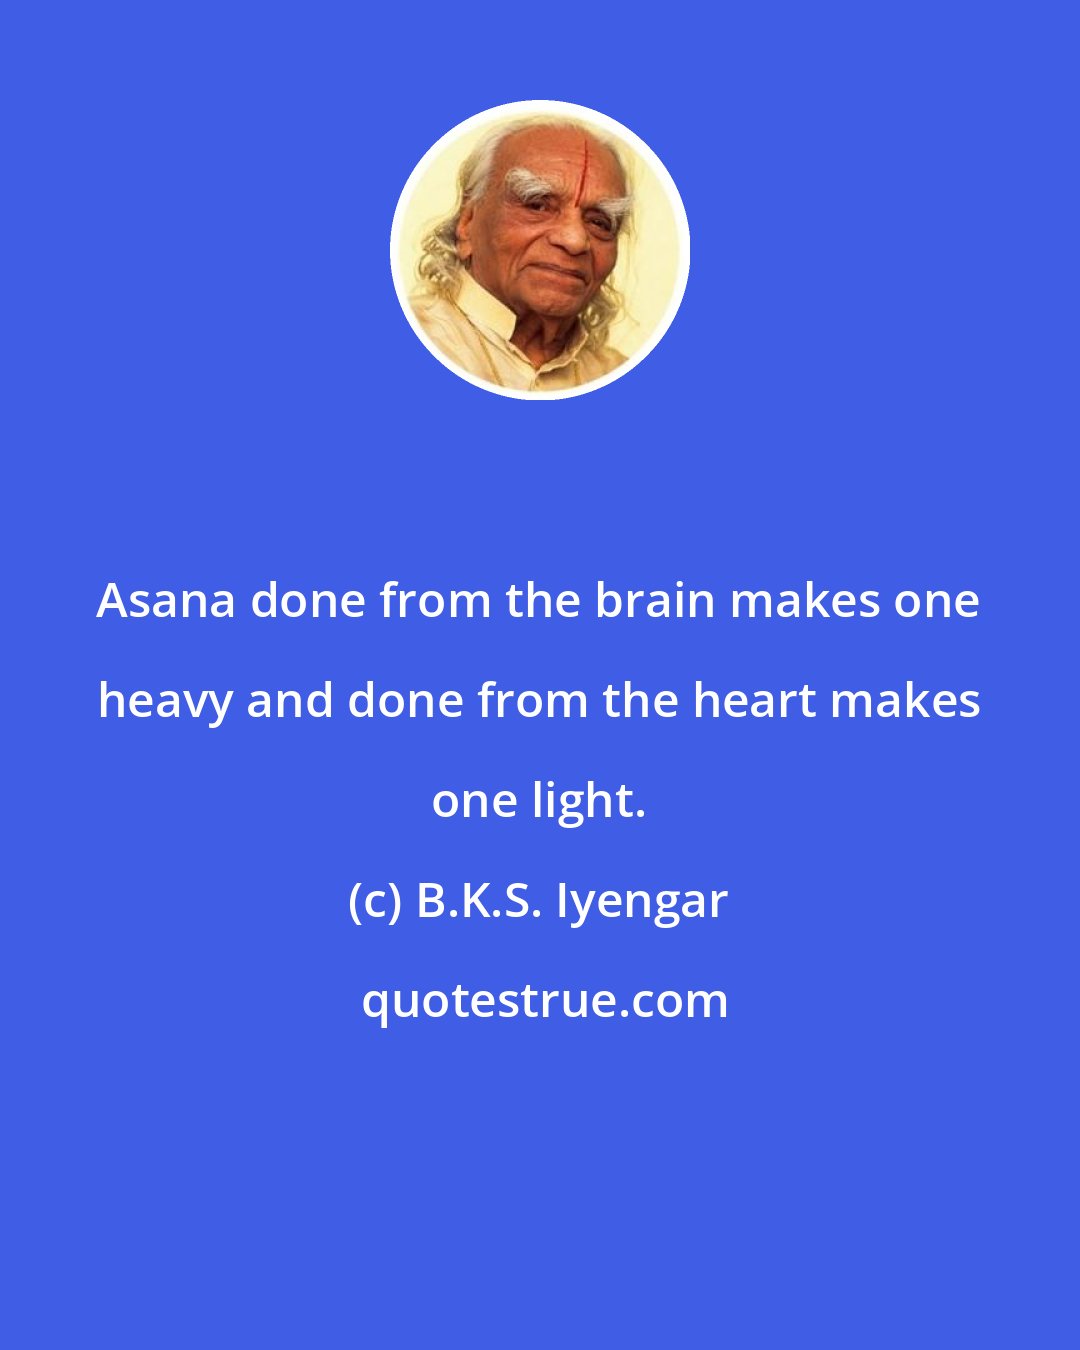 B.K.S. Iyengar: Asana done from the brain makes one heavy and done from the heart makes one light.